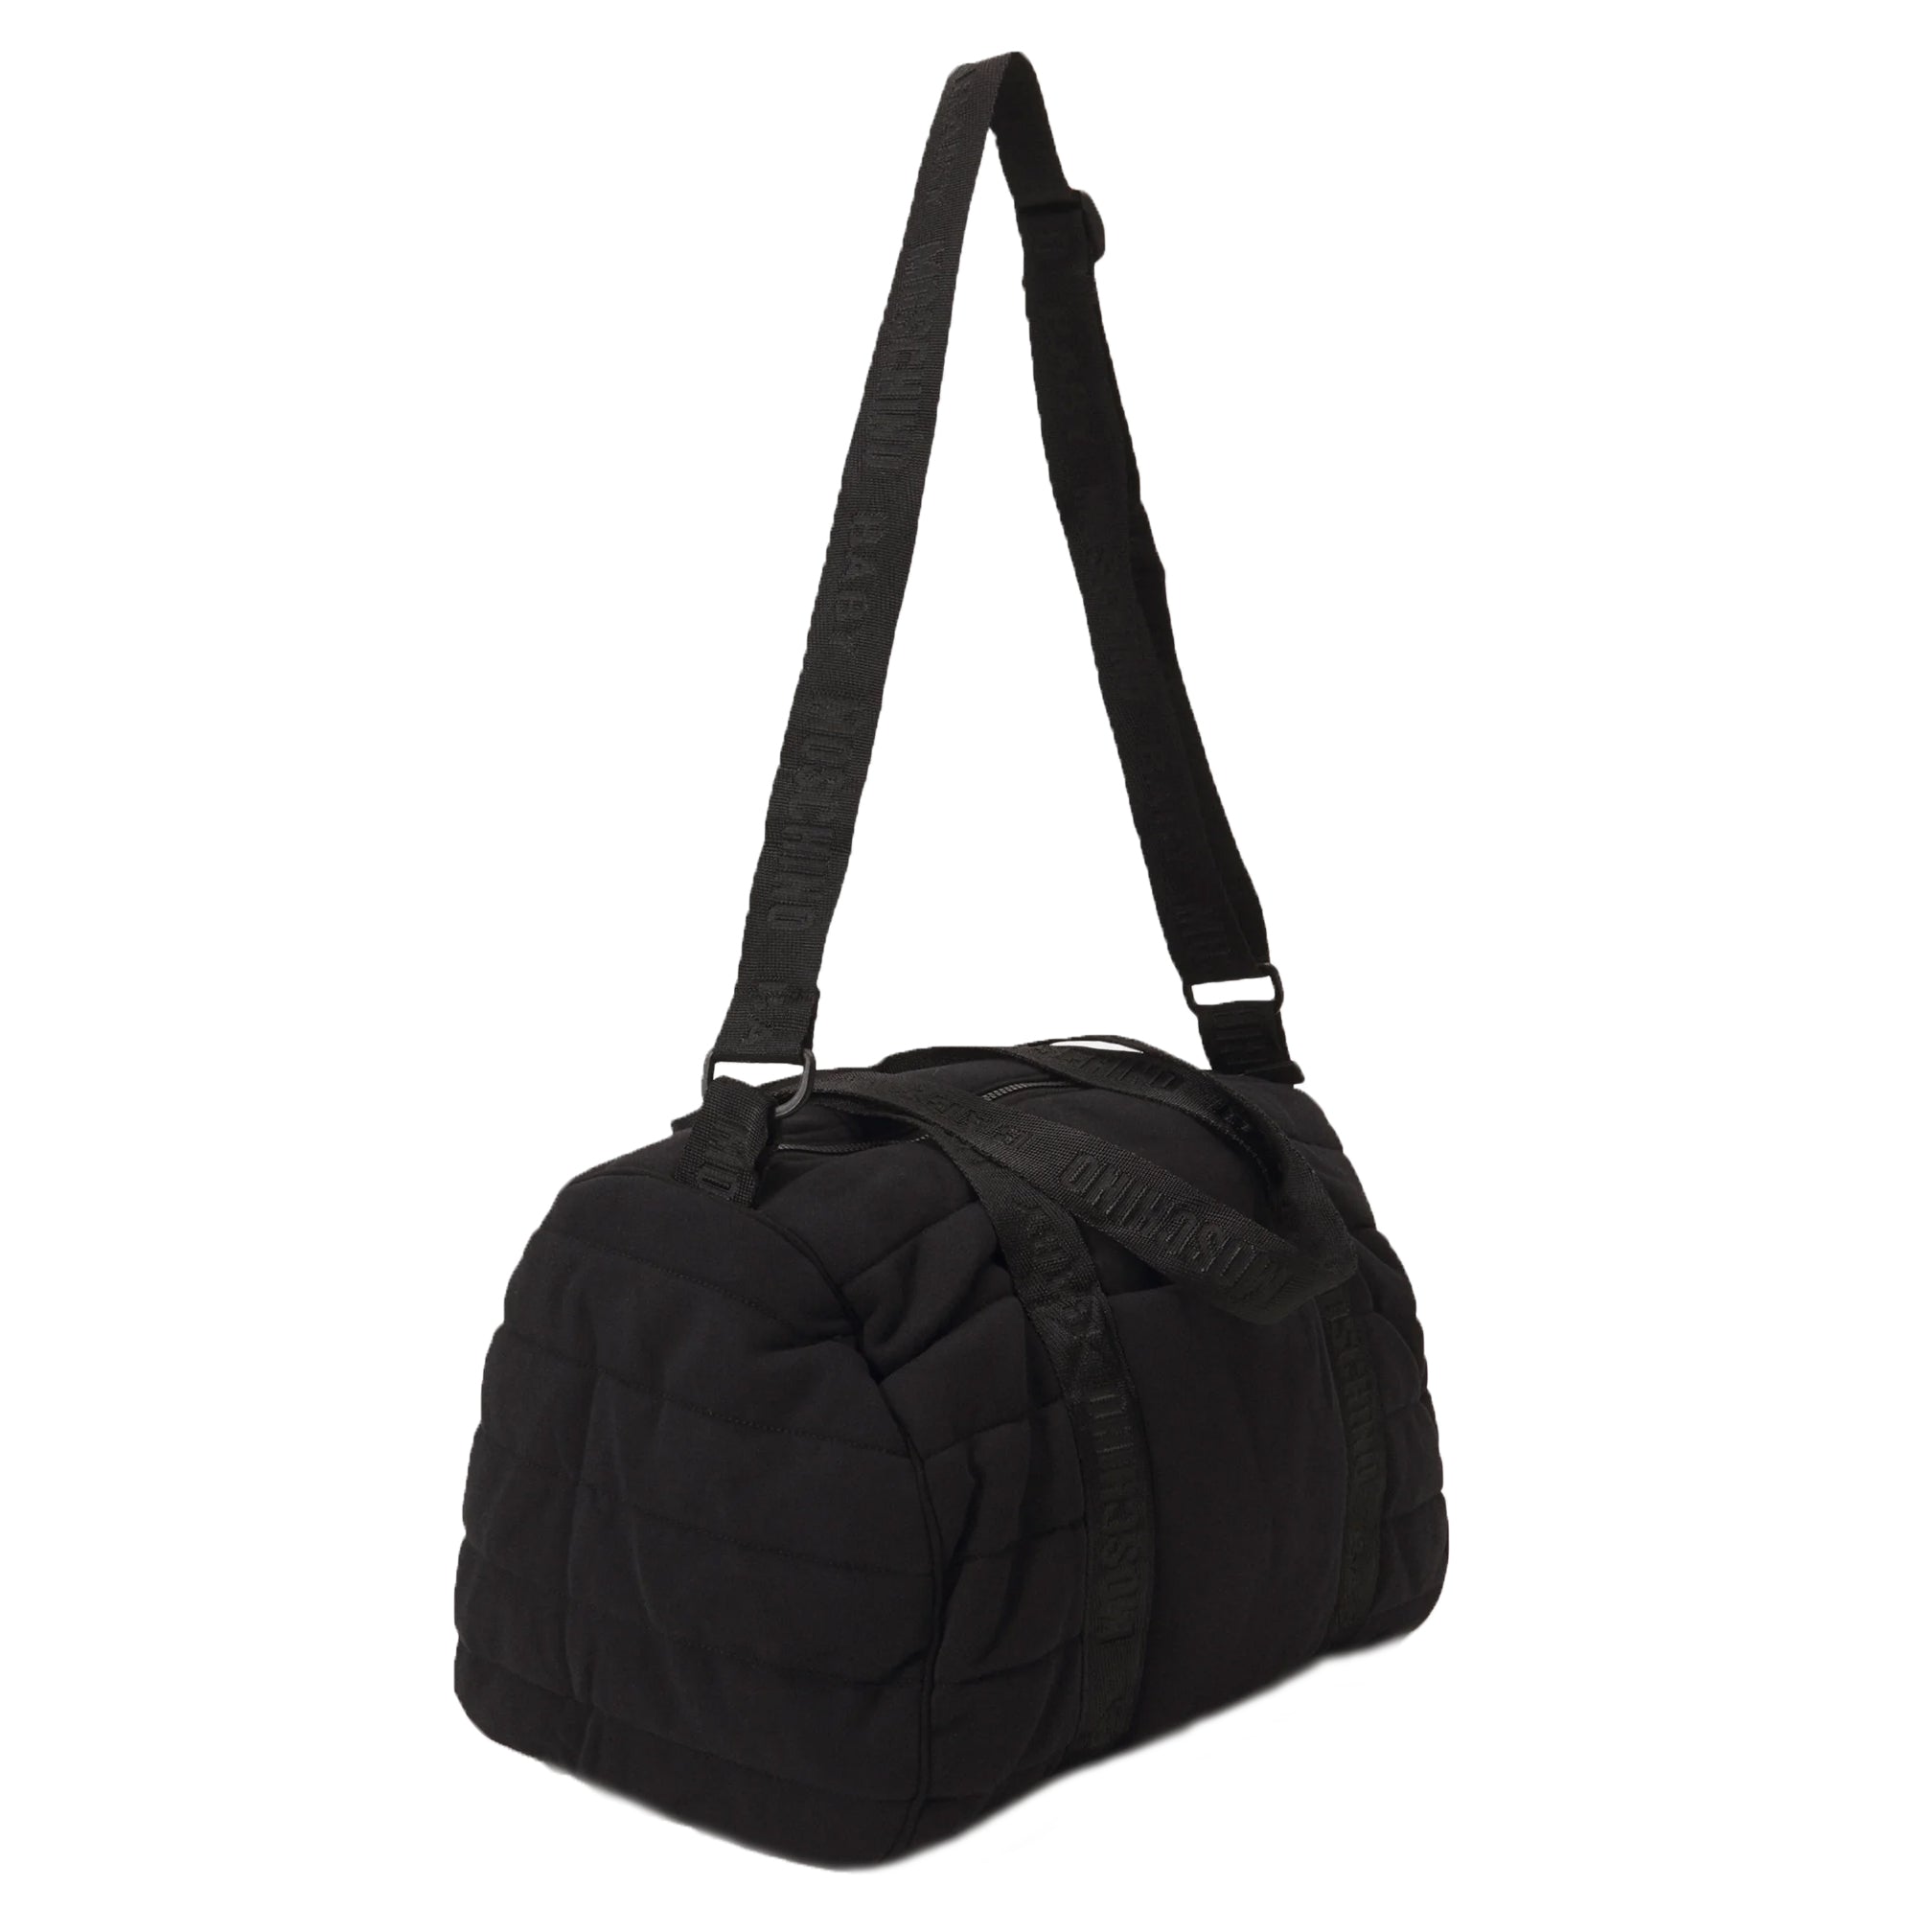 Moschino Black Duffel Diaper Bag